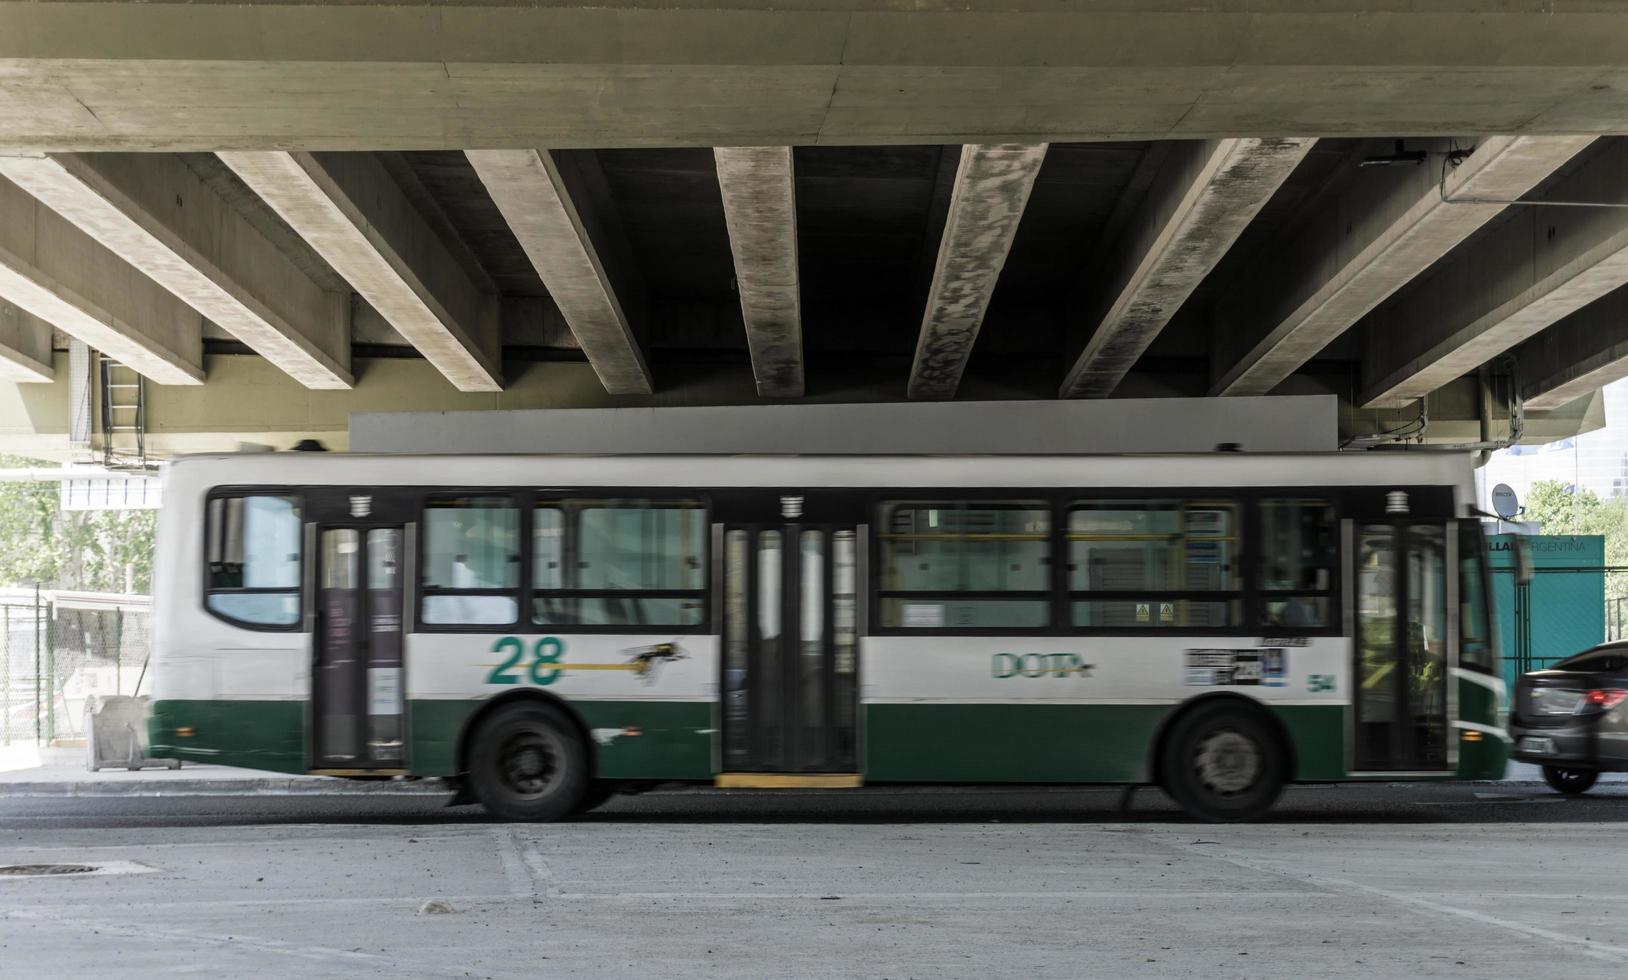 Buenos Aires, Argentina, 2019. Bus on the move under bridge photo